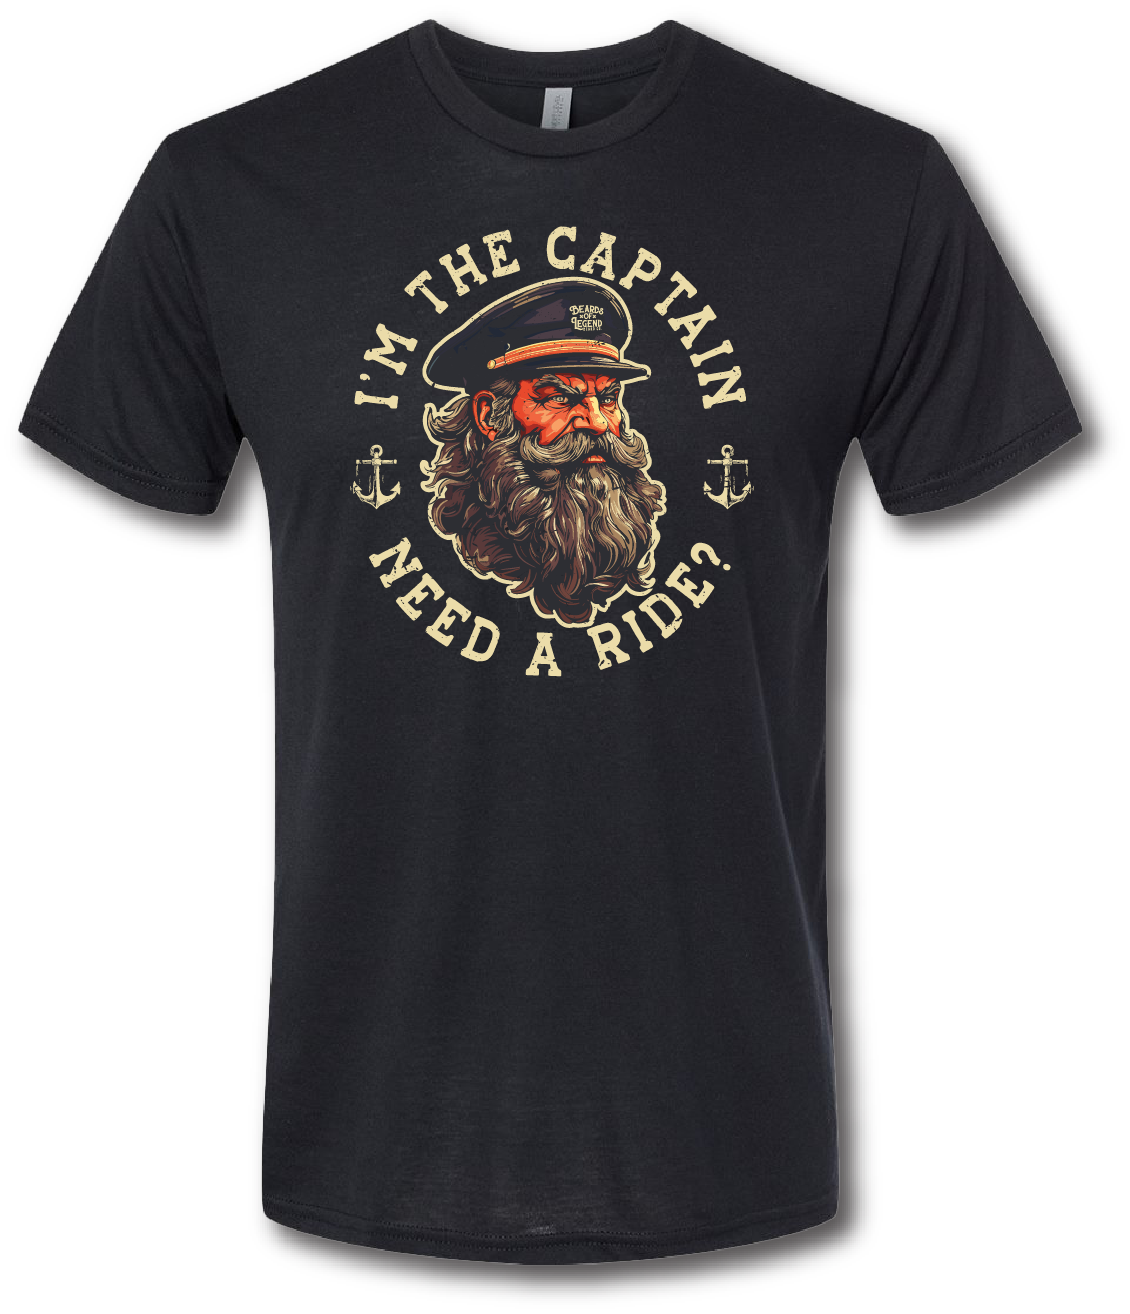 The Bearded Captain Short Sleeve T-shirt